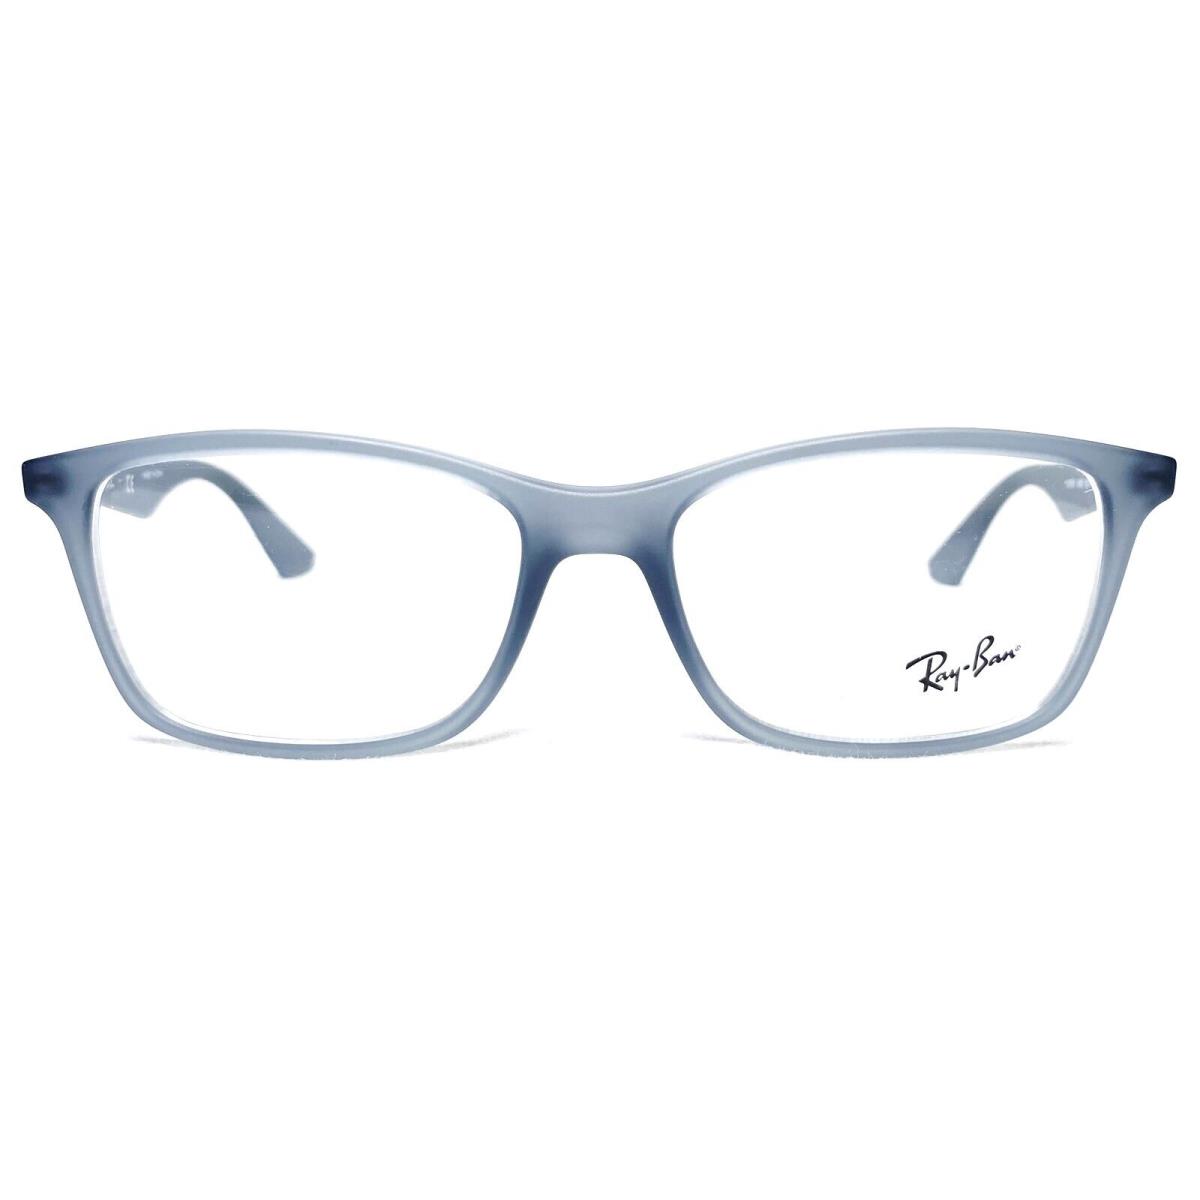 Ray Ban RB7047 5482 Mens Matte Grey Rectangle Eyeglasses Frames 56/17 145 - Matte Transparent Grey, Frame: Matte Transparent Grey, Manufacturer: